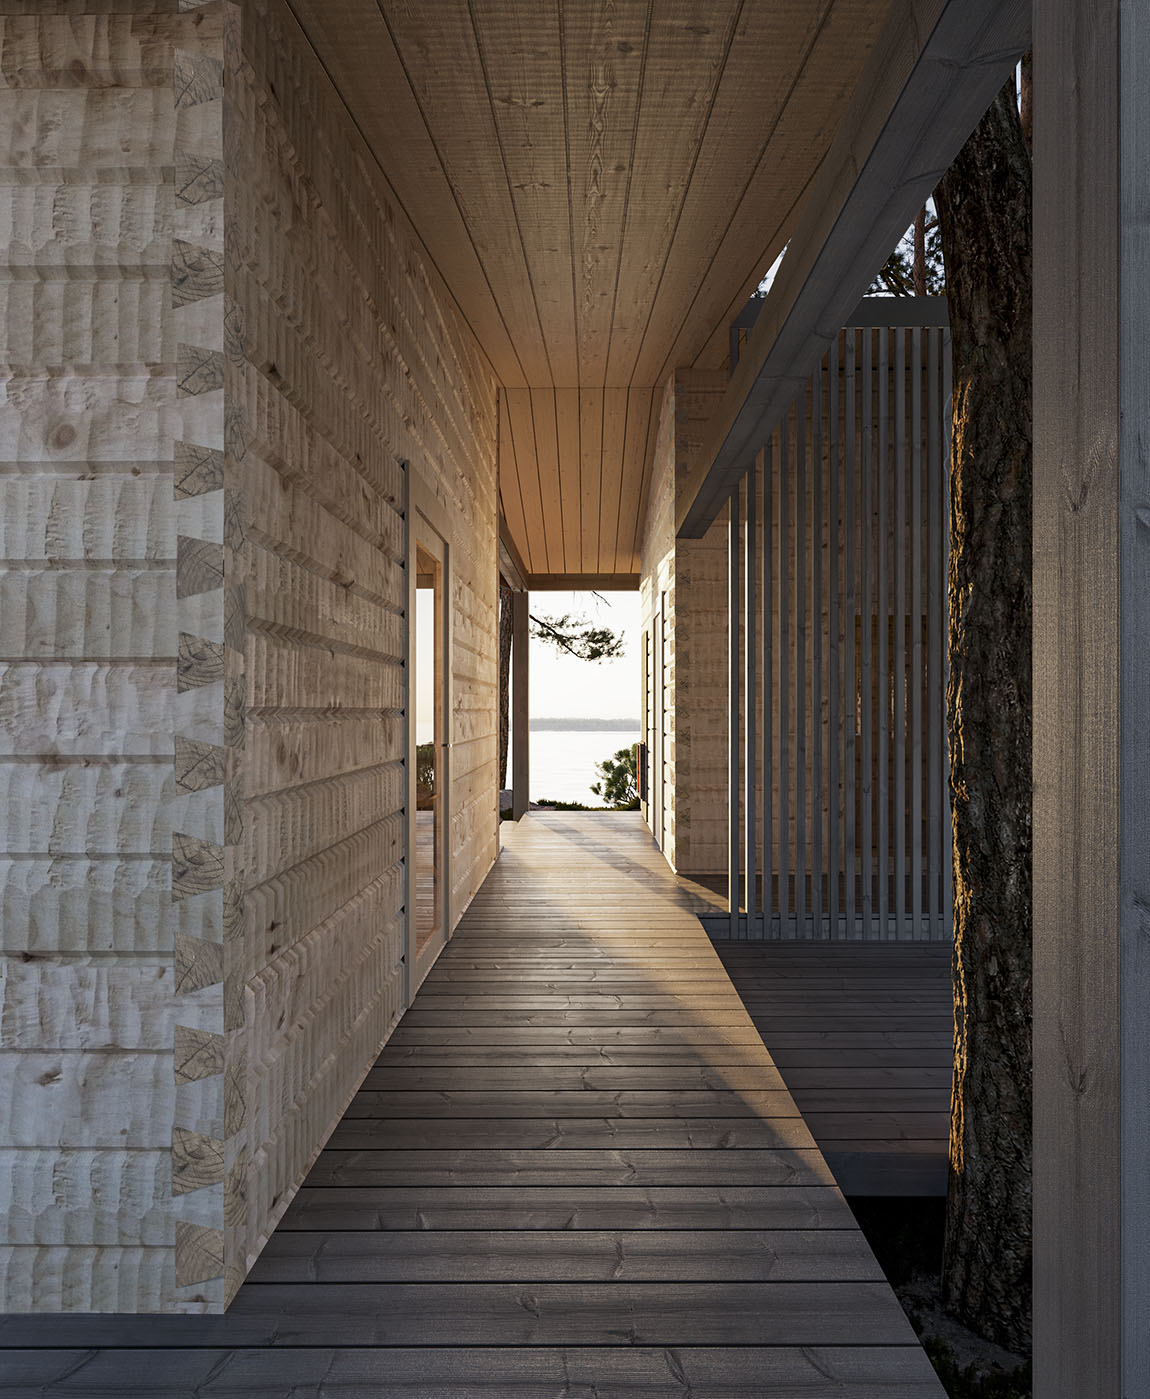 MNY Architects: Where simplicity meets sustainability